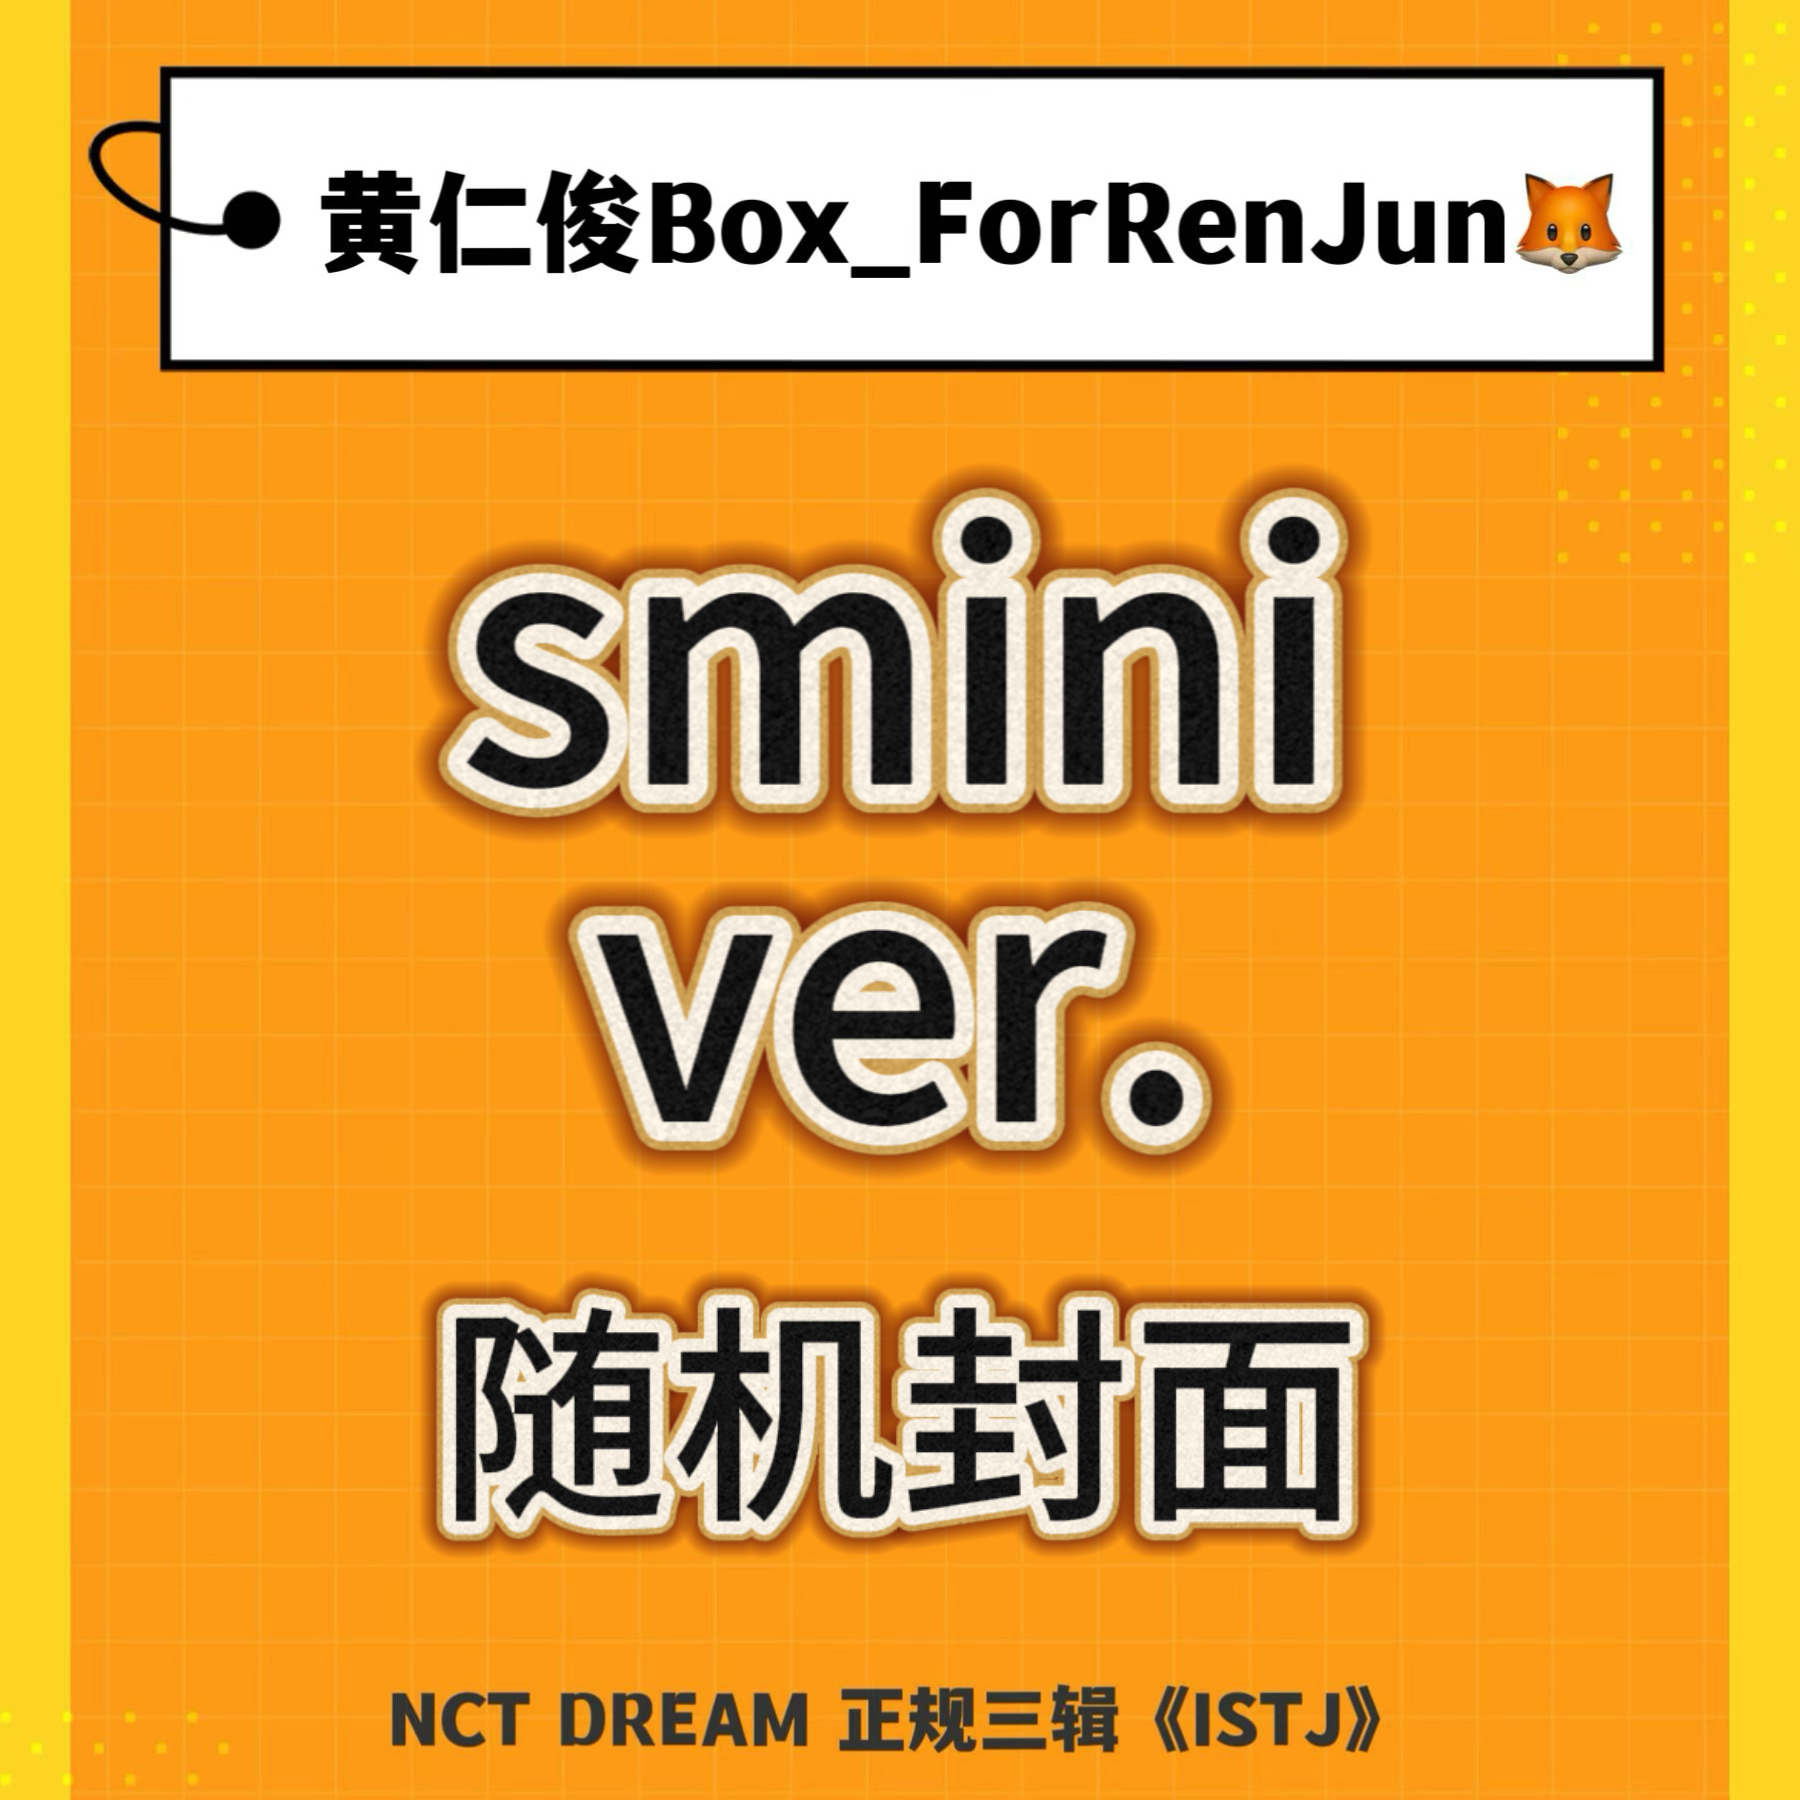 [全款 裸专] NCT DREAM - 正规3辑 [ISTJ] (SMini Ver.) (Smart Album) (随机版本)_黄仁俊吧RenJunBar